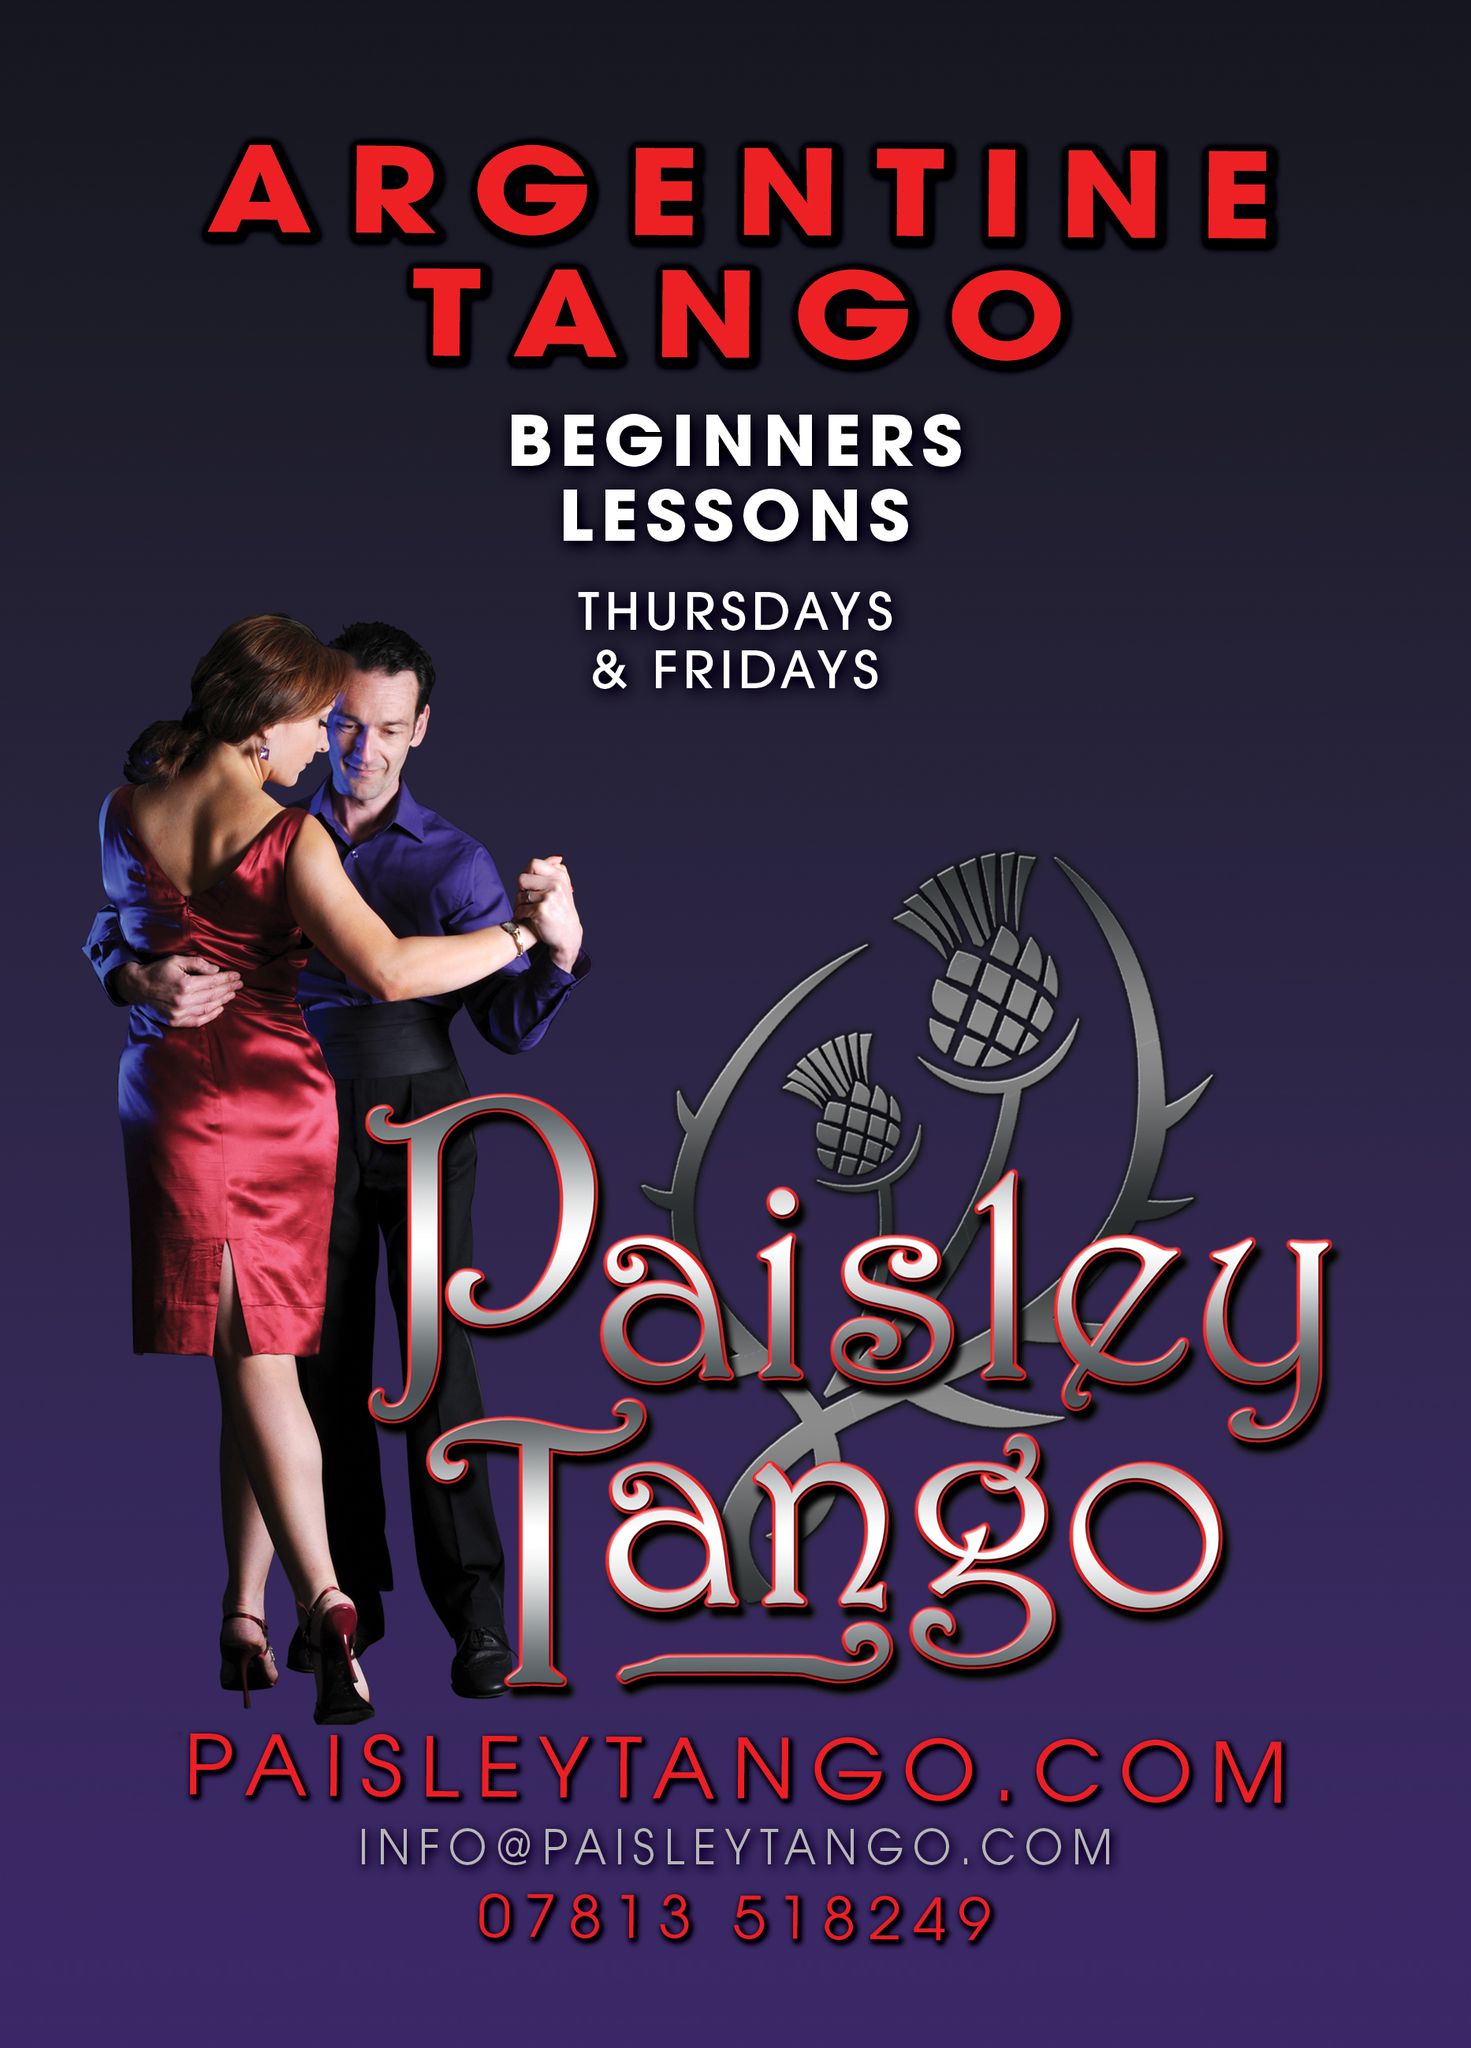 Leaflet advertising Paisley Tango